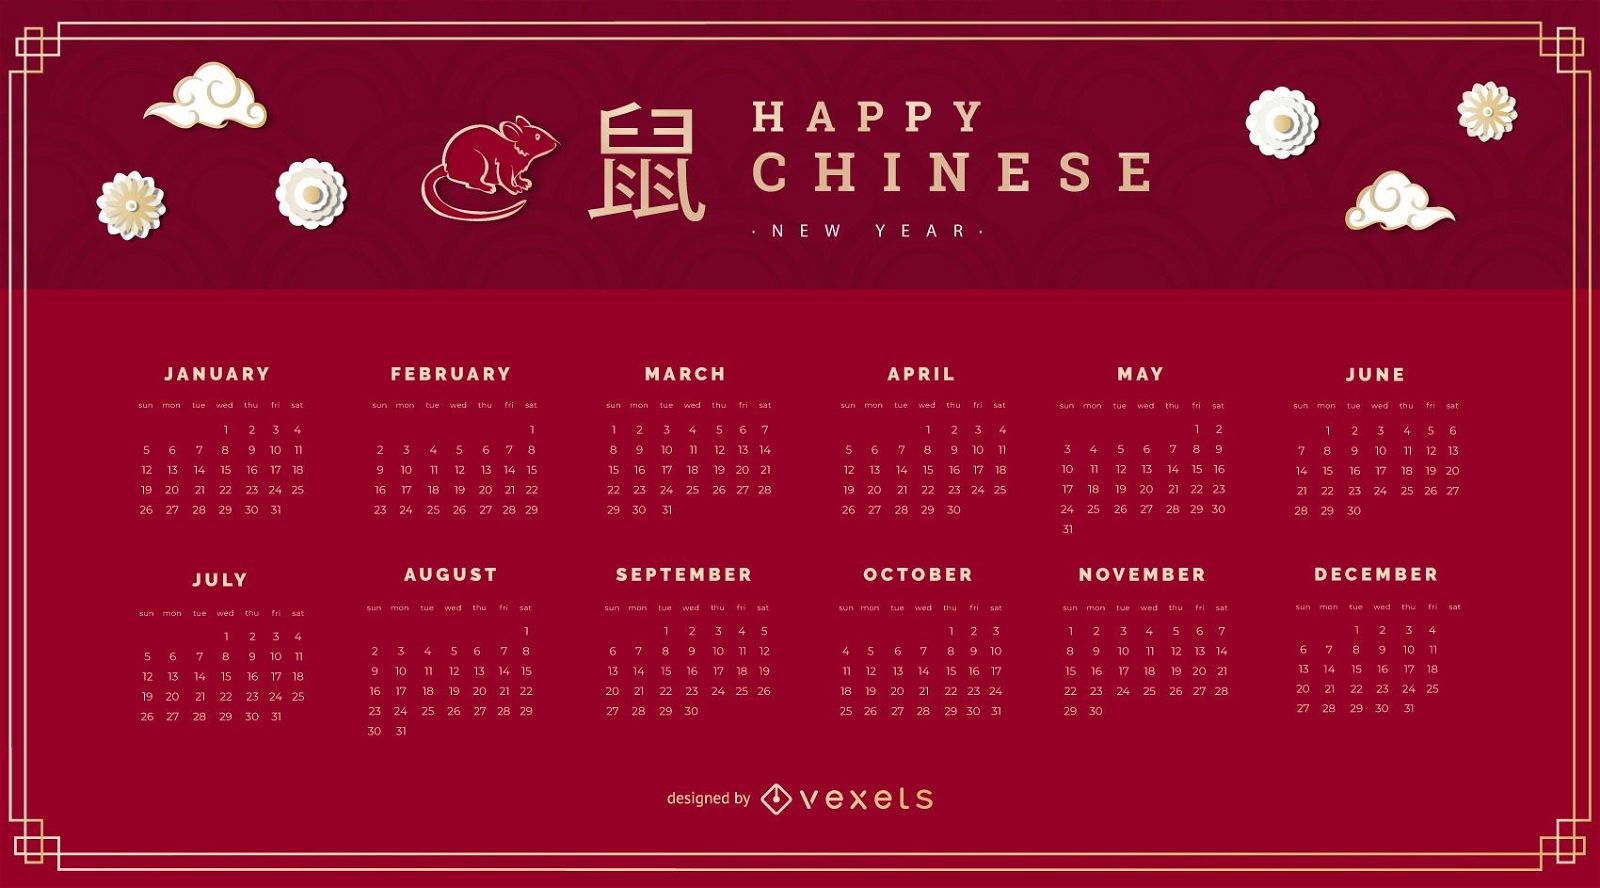 2020 Chinese new year calendar